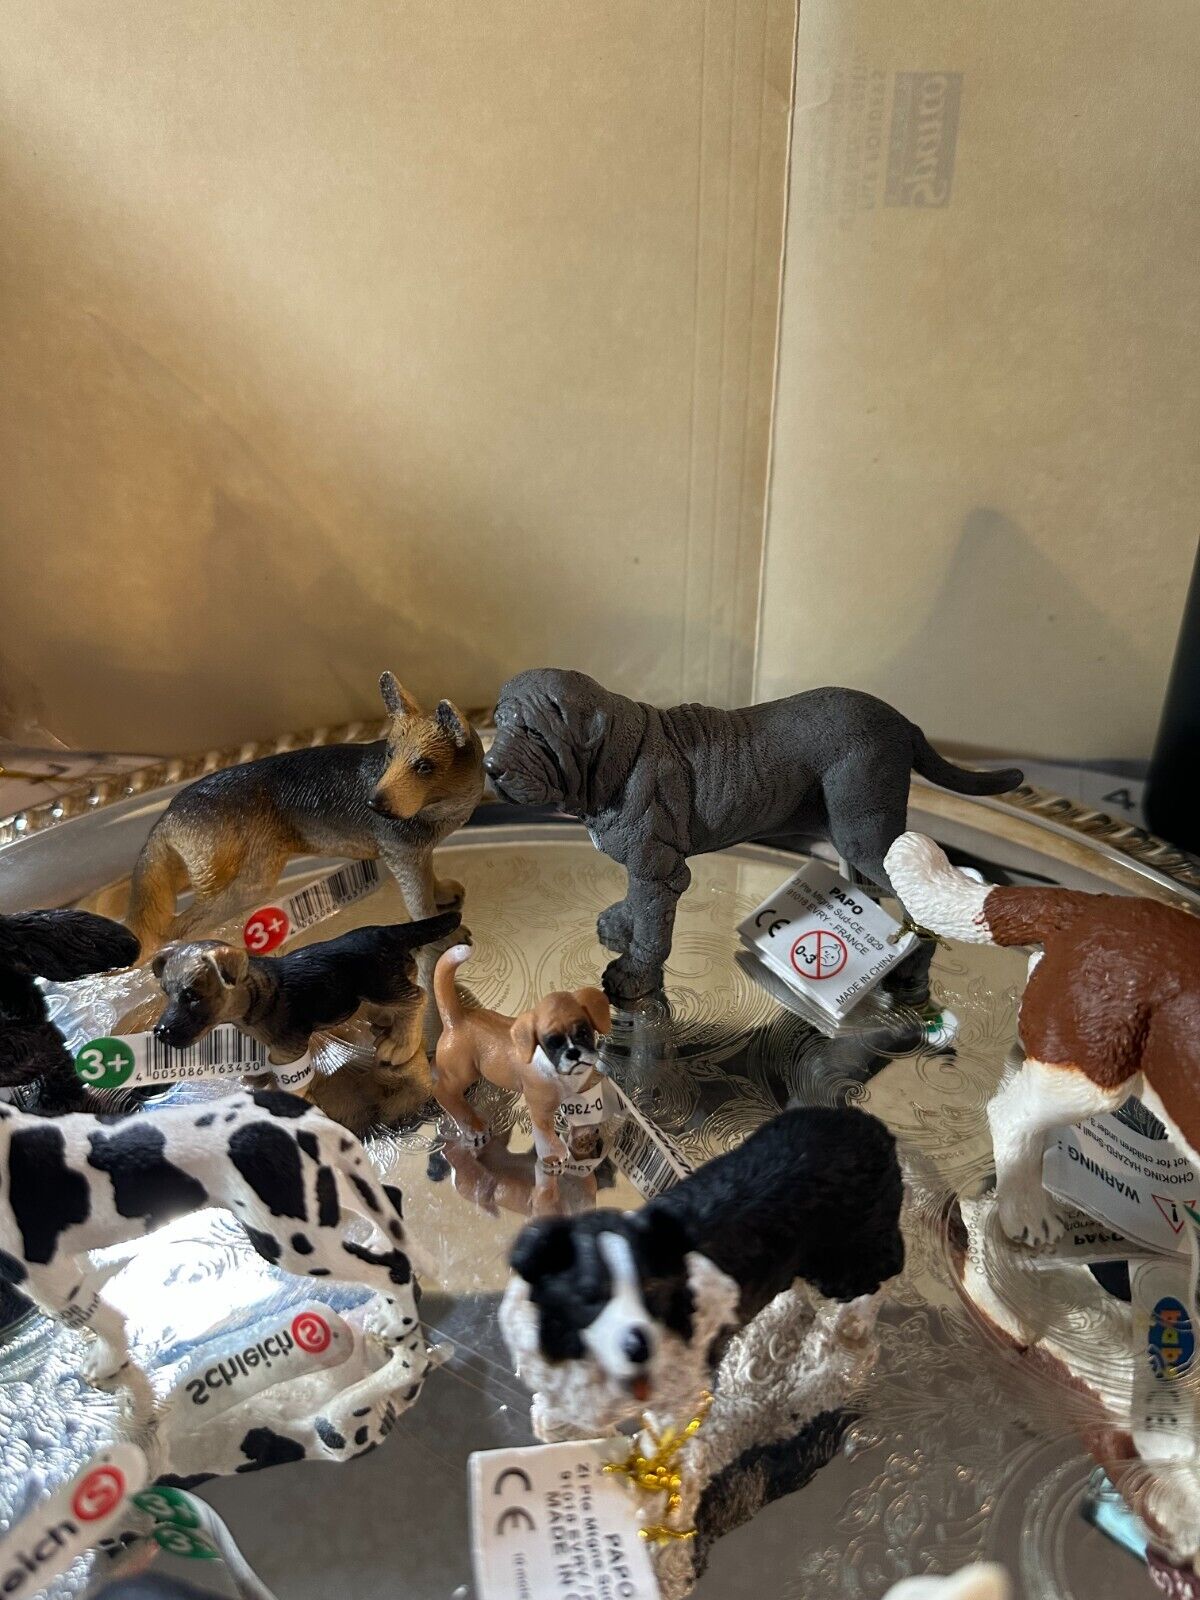 Schleich and Papo Dog Figurines